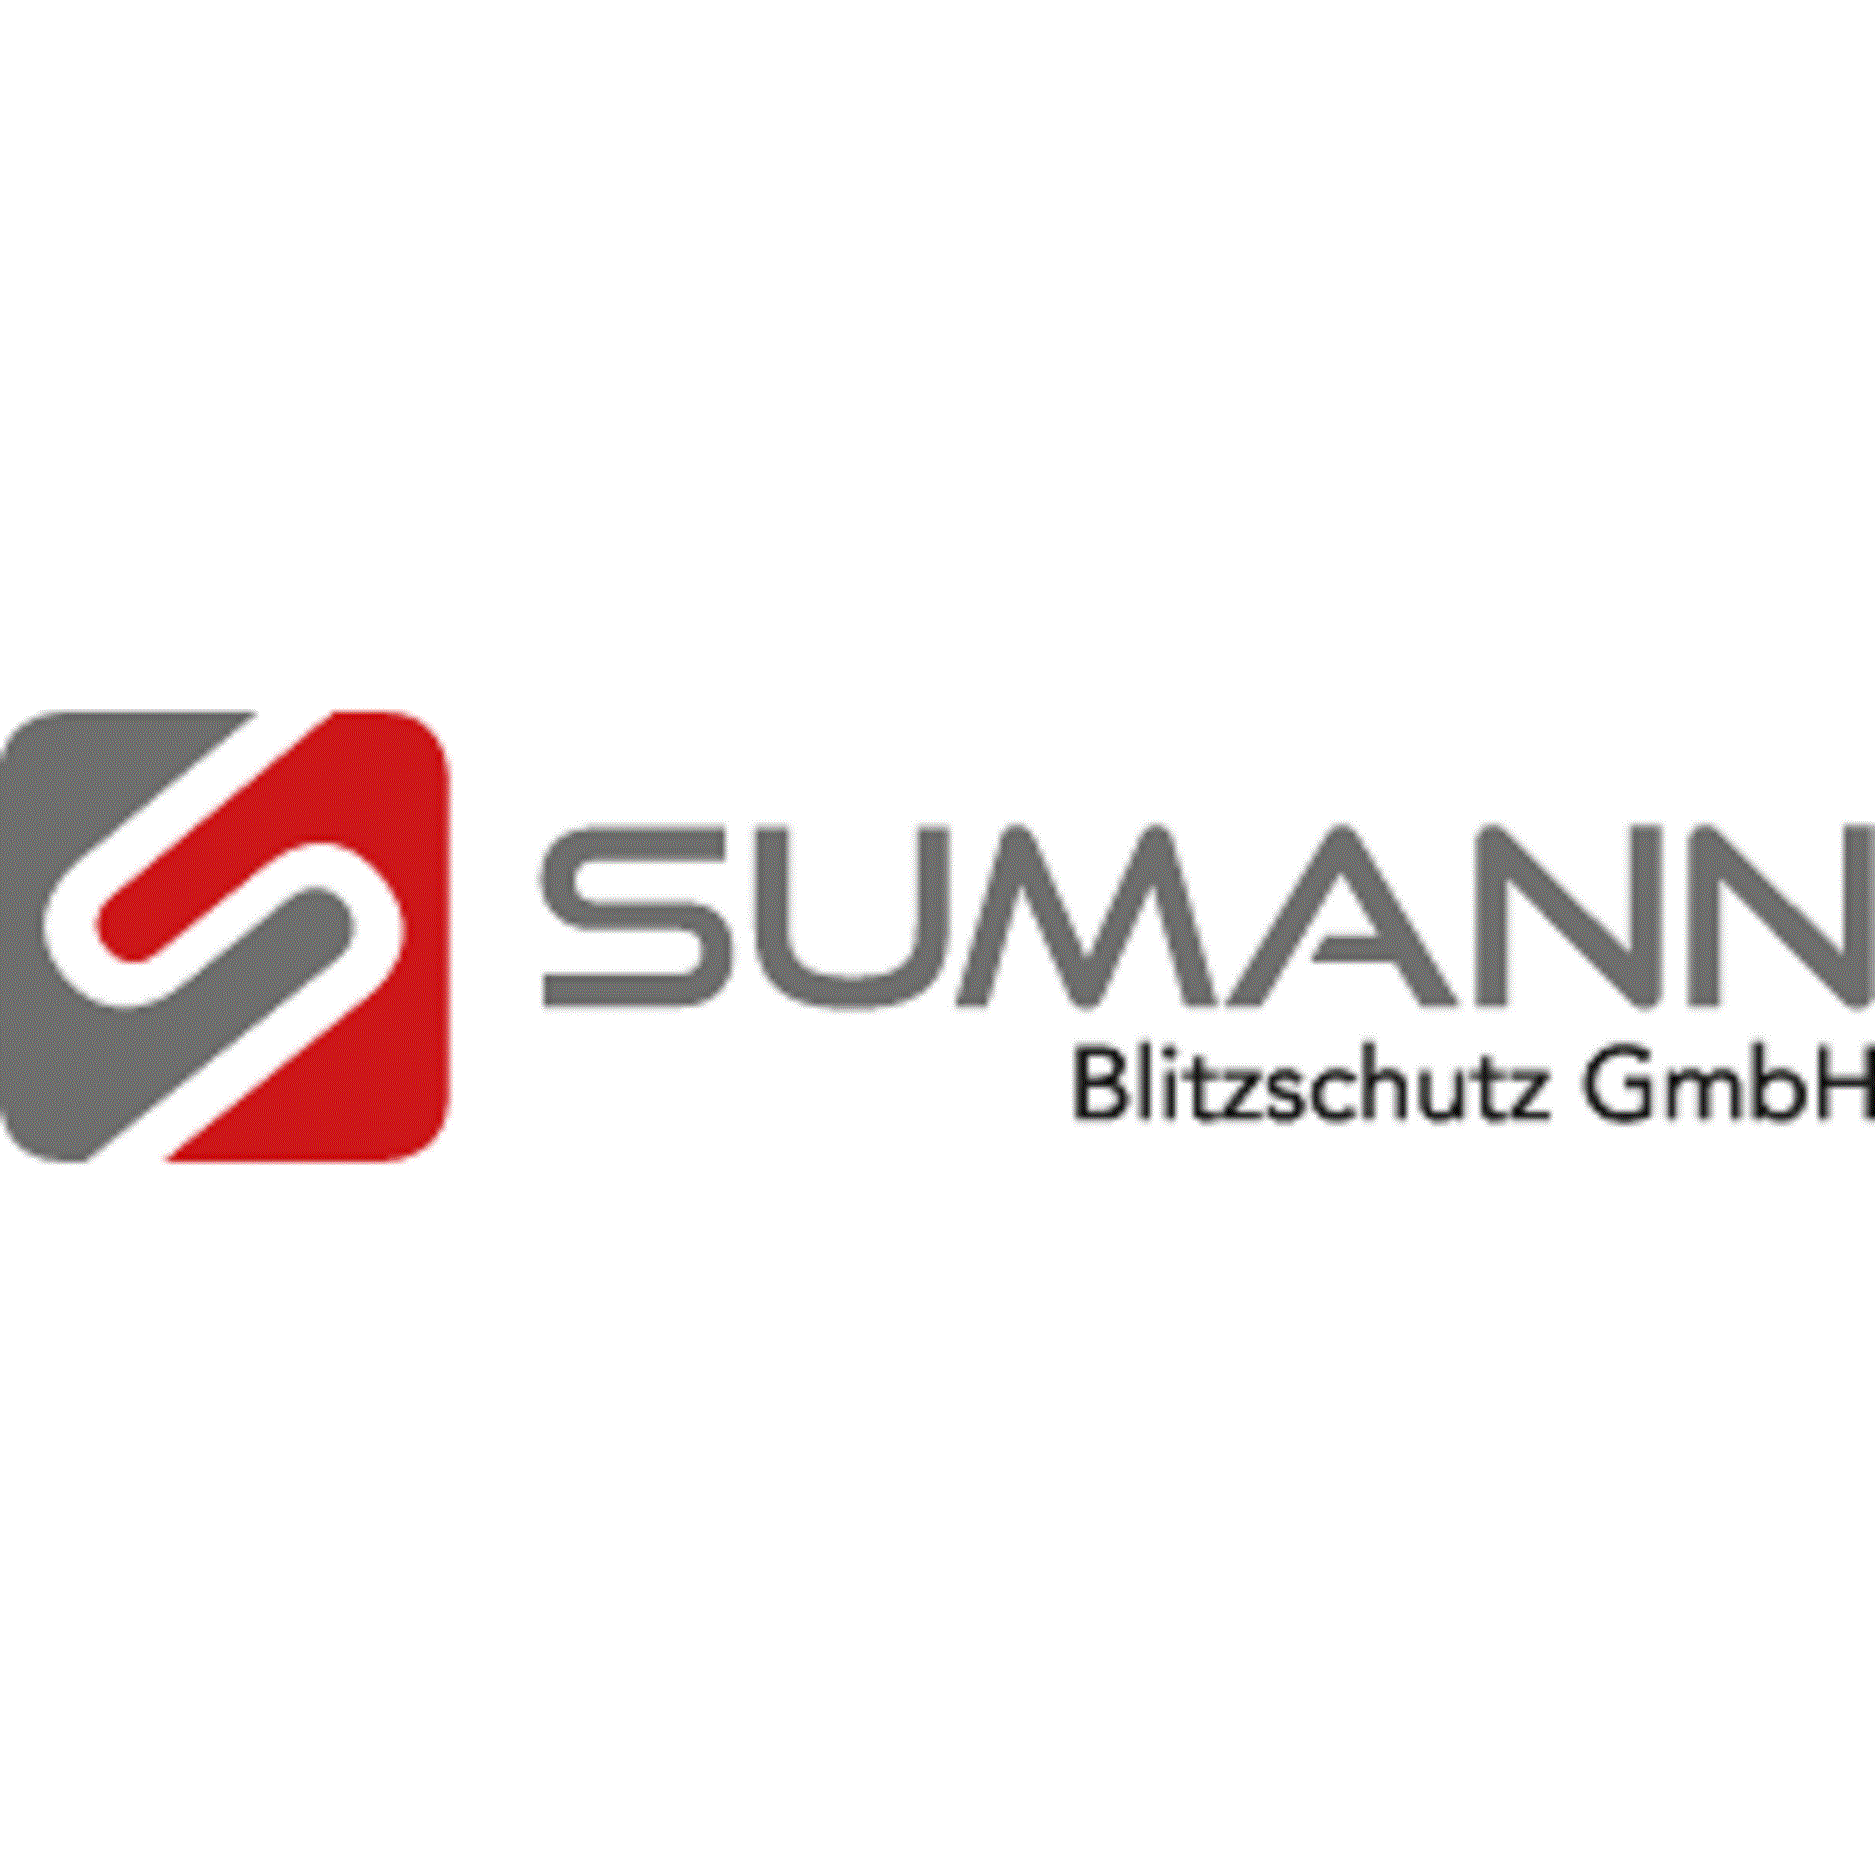 Sumann Blitzschutz GmbH in Leobendorf